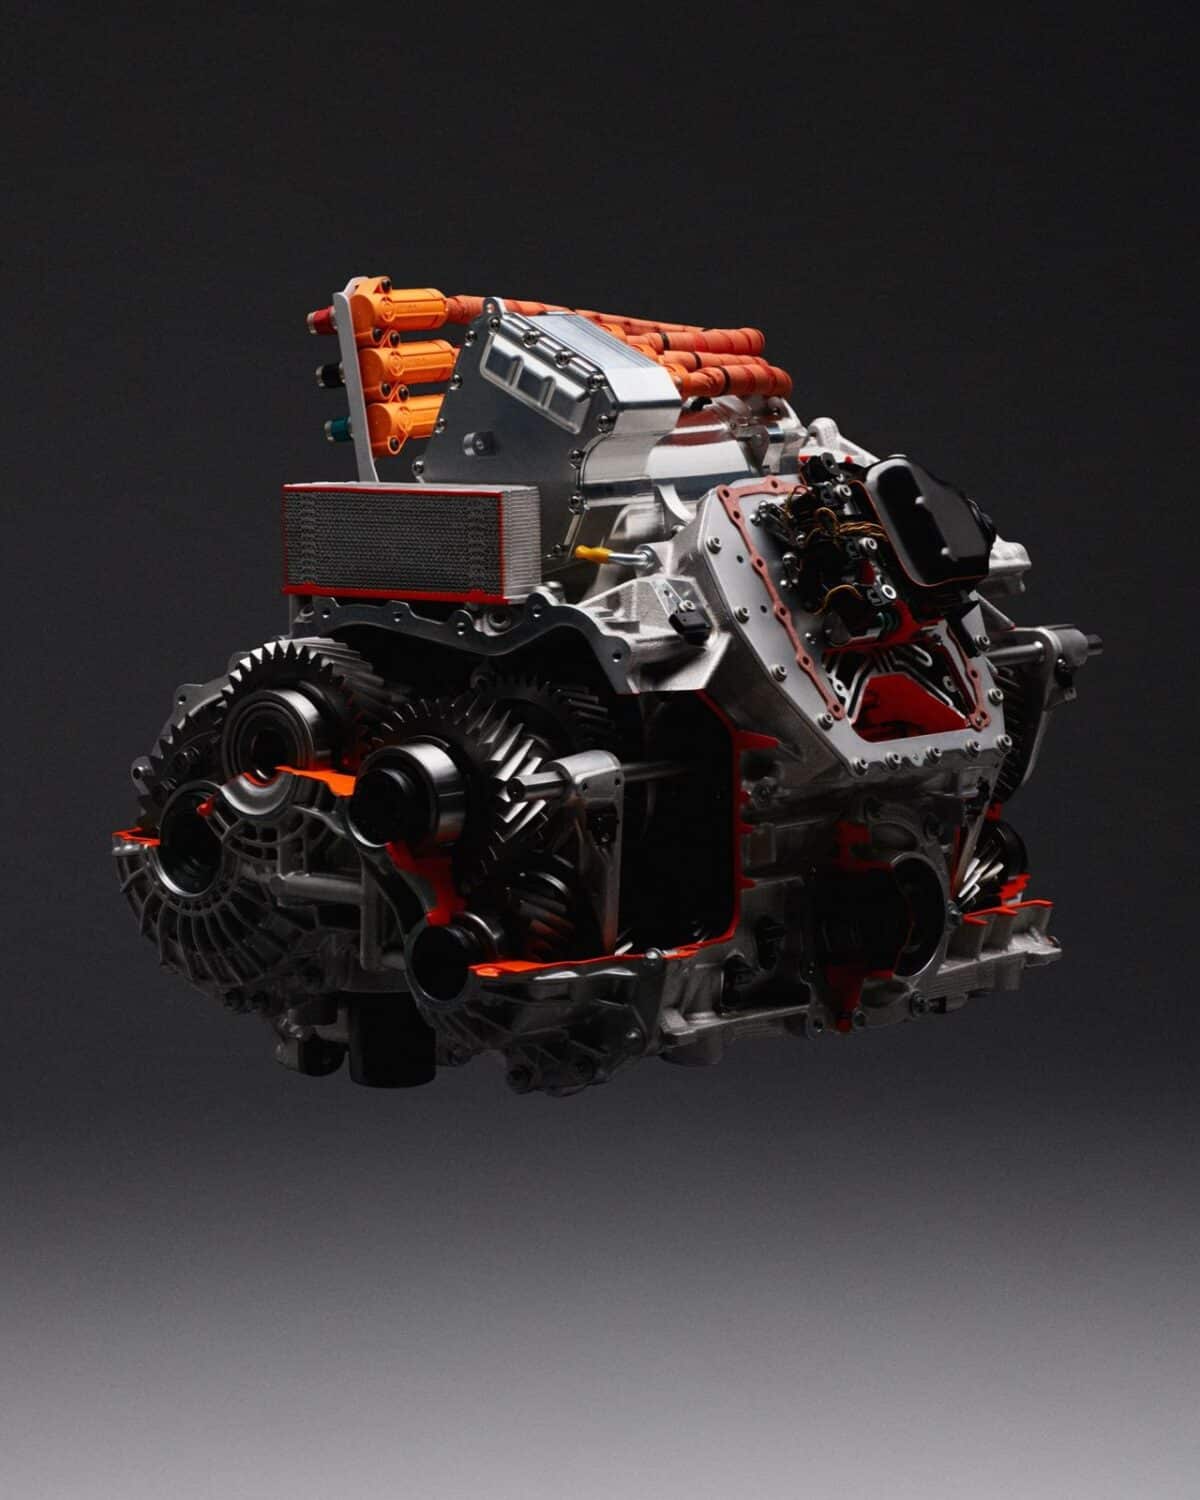 6.5-liter V12 engine